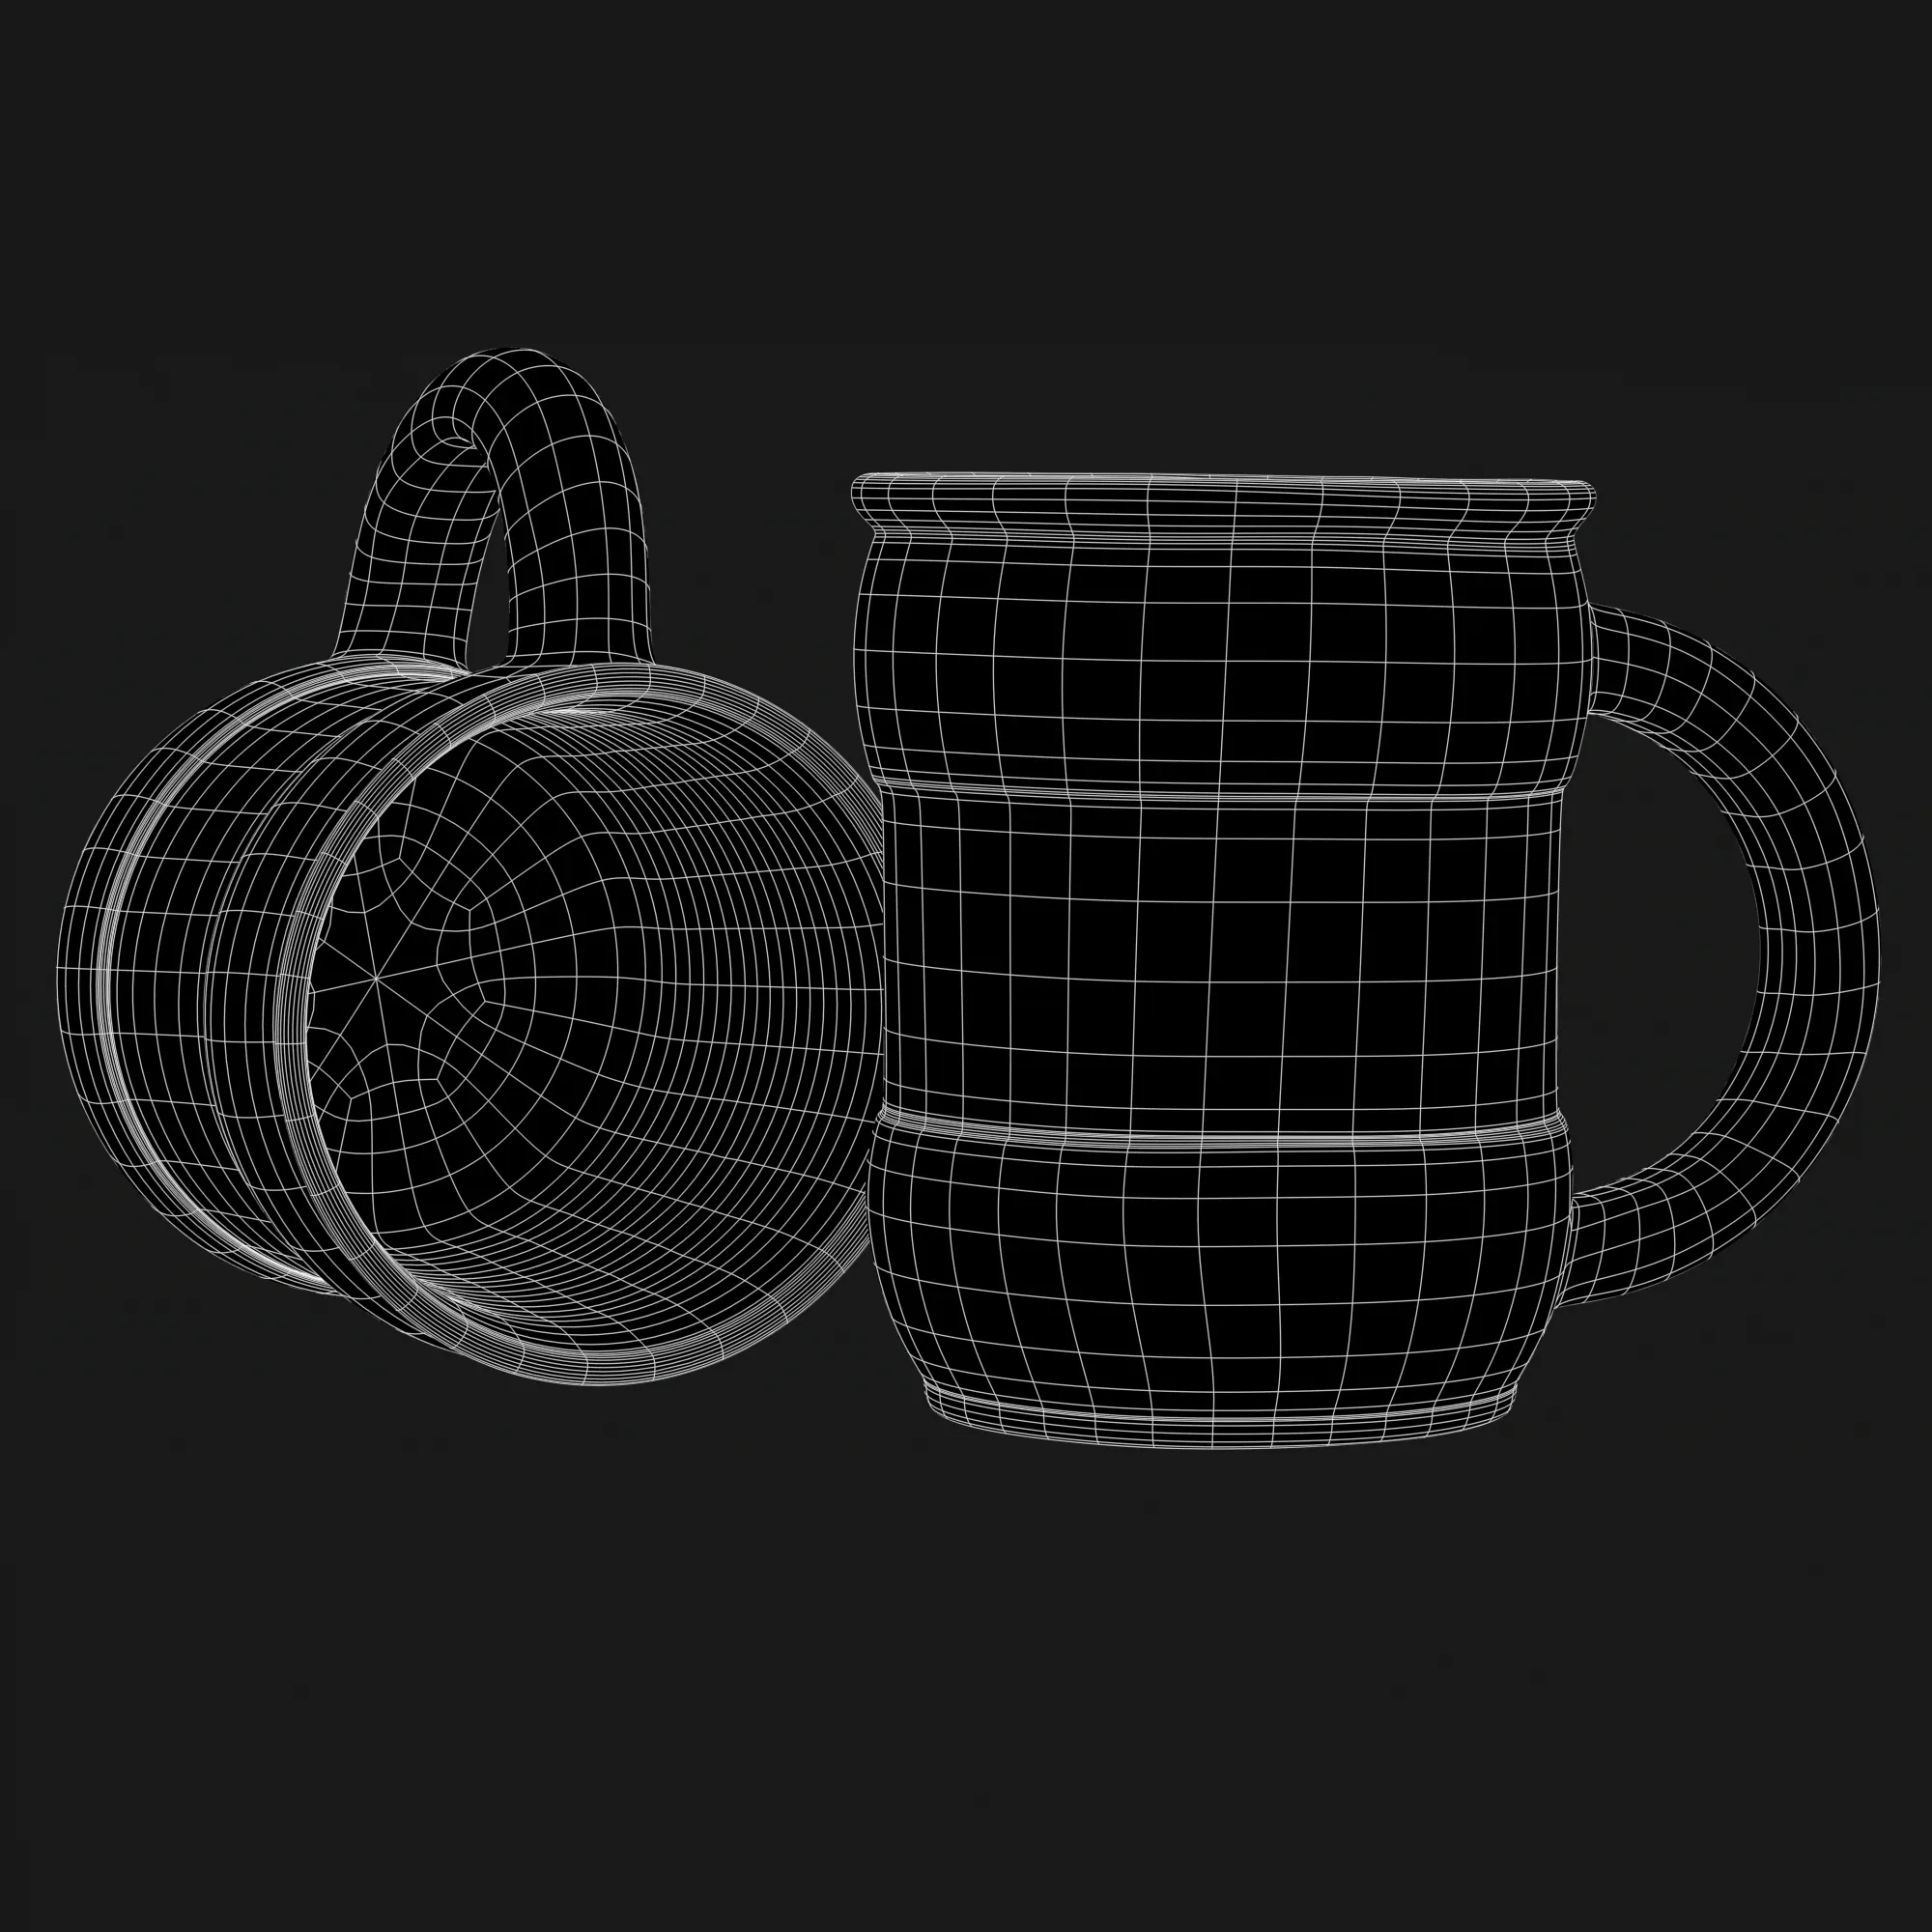 Wood Cup Photorealistic 3D Model